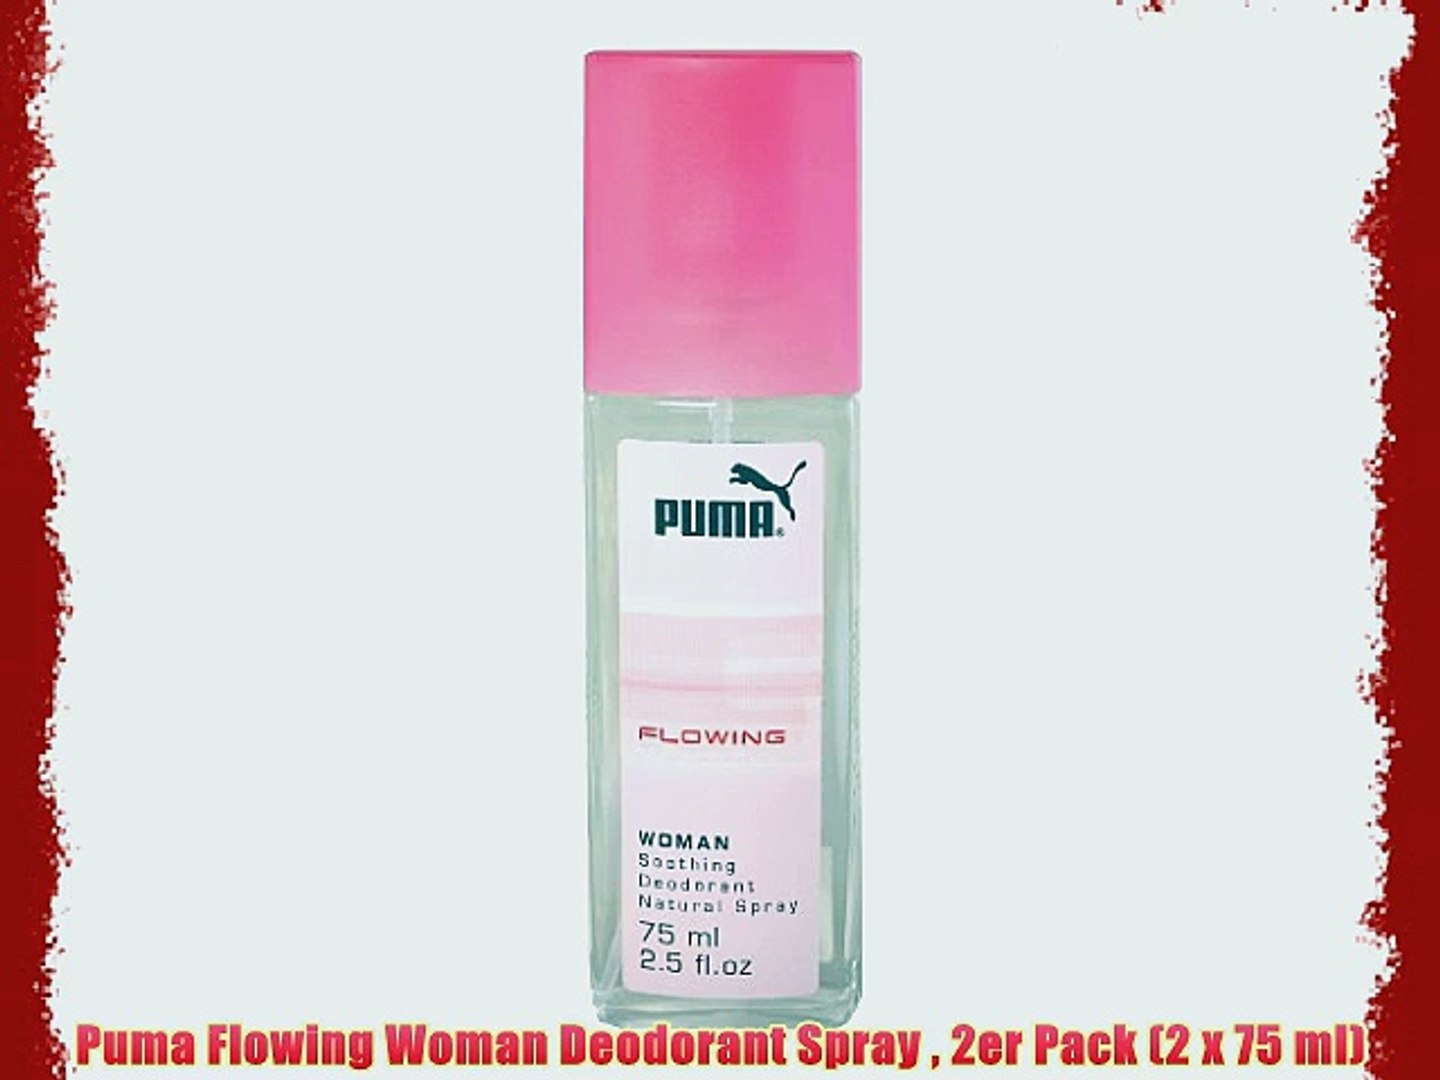 Puma Flowing Woman Deodorant Spray 2er Pack (2 x 75 ml) - video Dailymotion